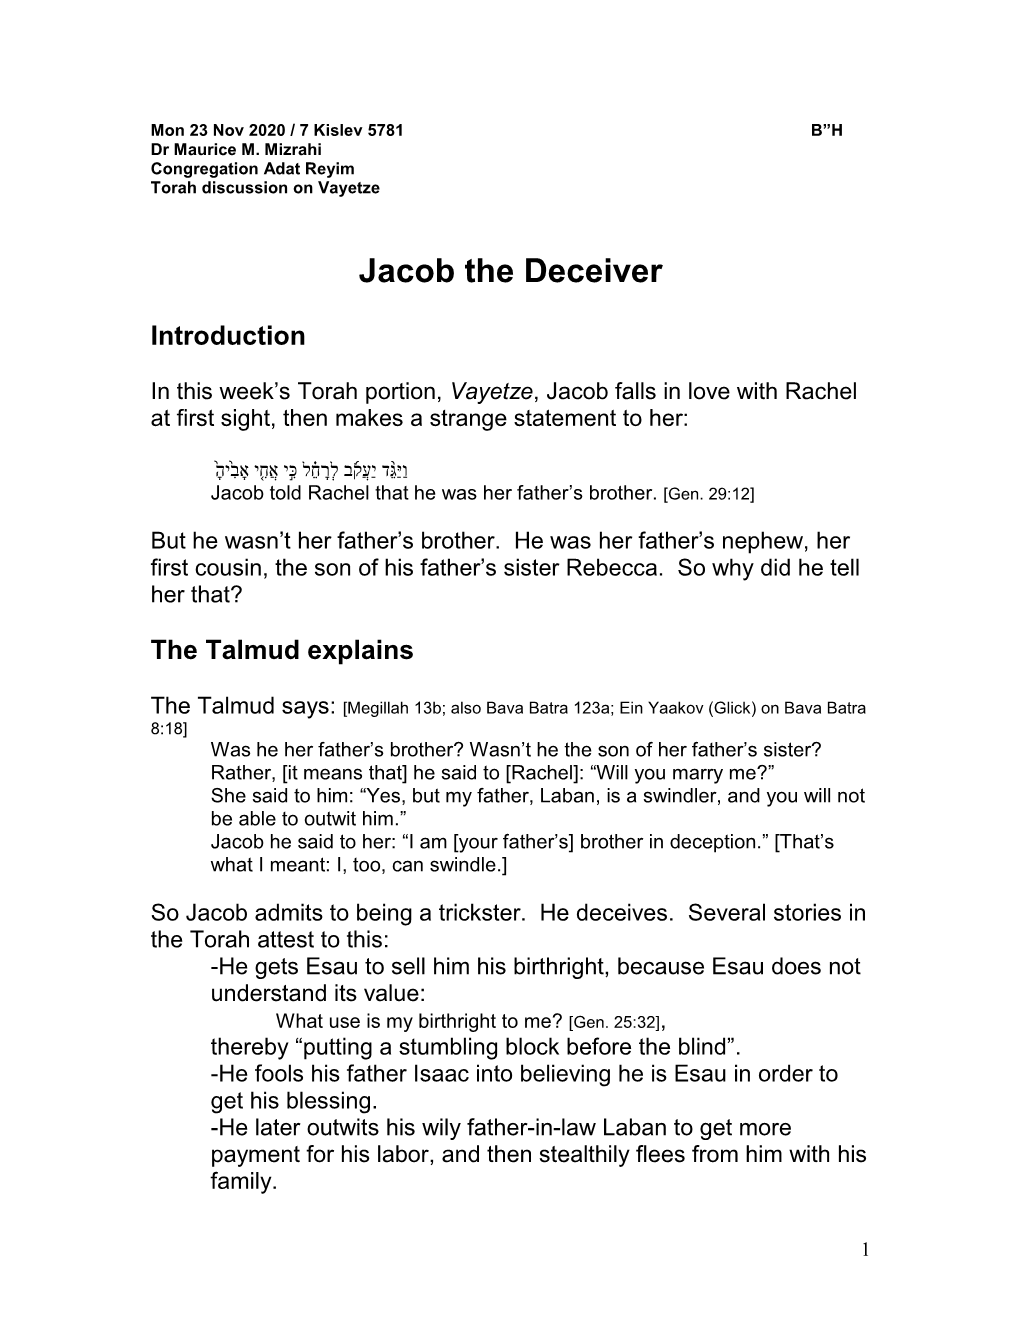 Jacob the Deceiver (Vayetze)